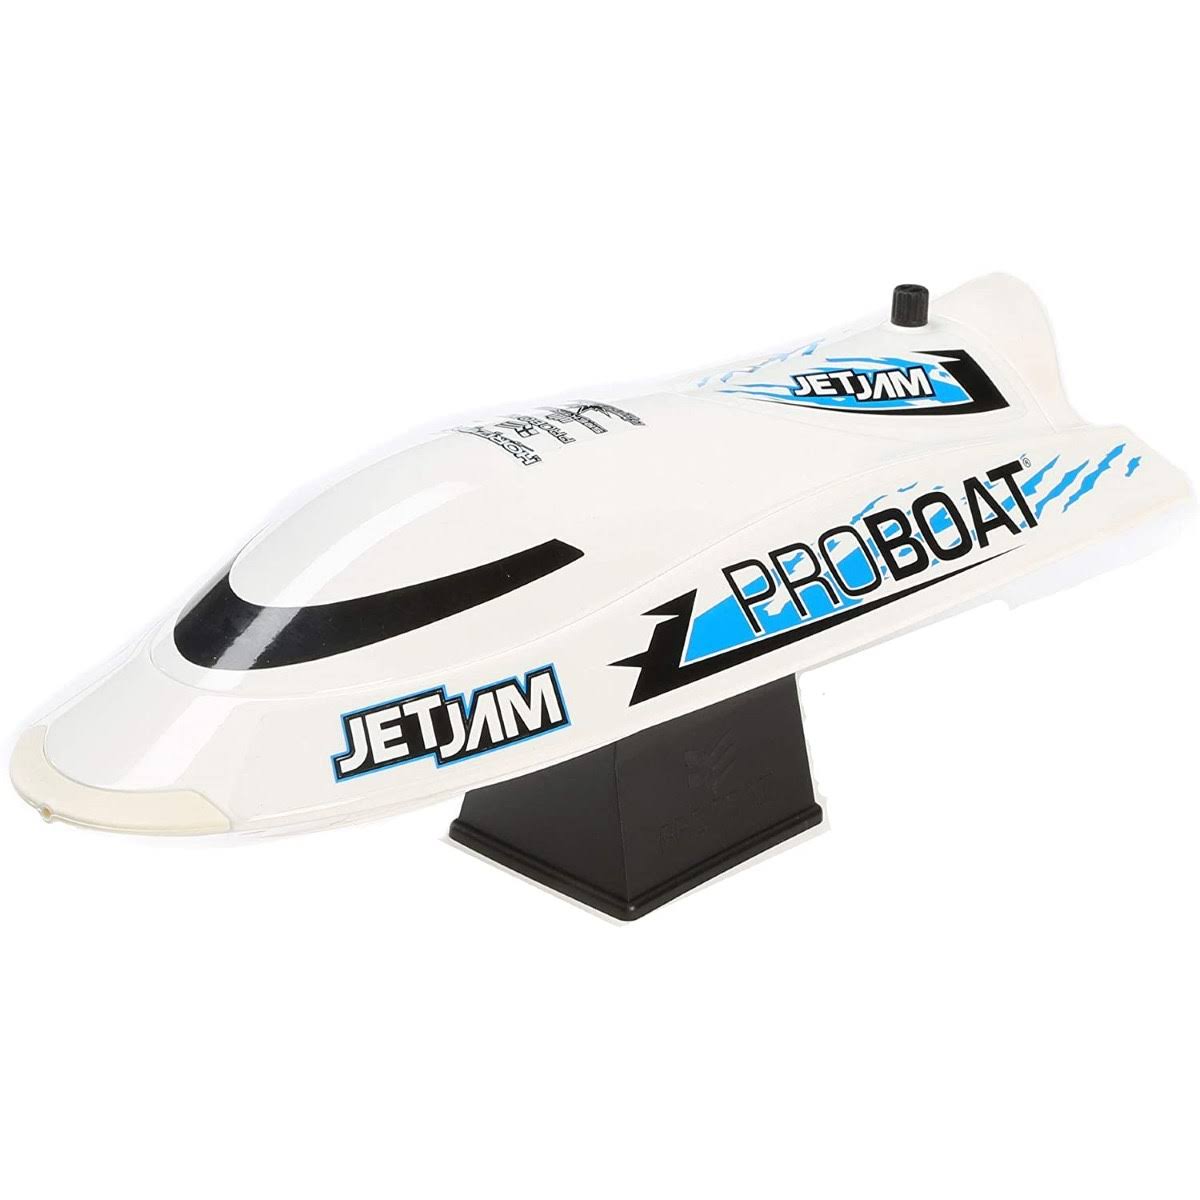 Pro Boat Jet Jam Pool Racer RC Boat, RTR, White - PRB08031T2